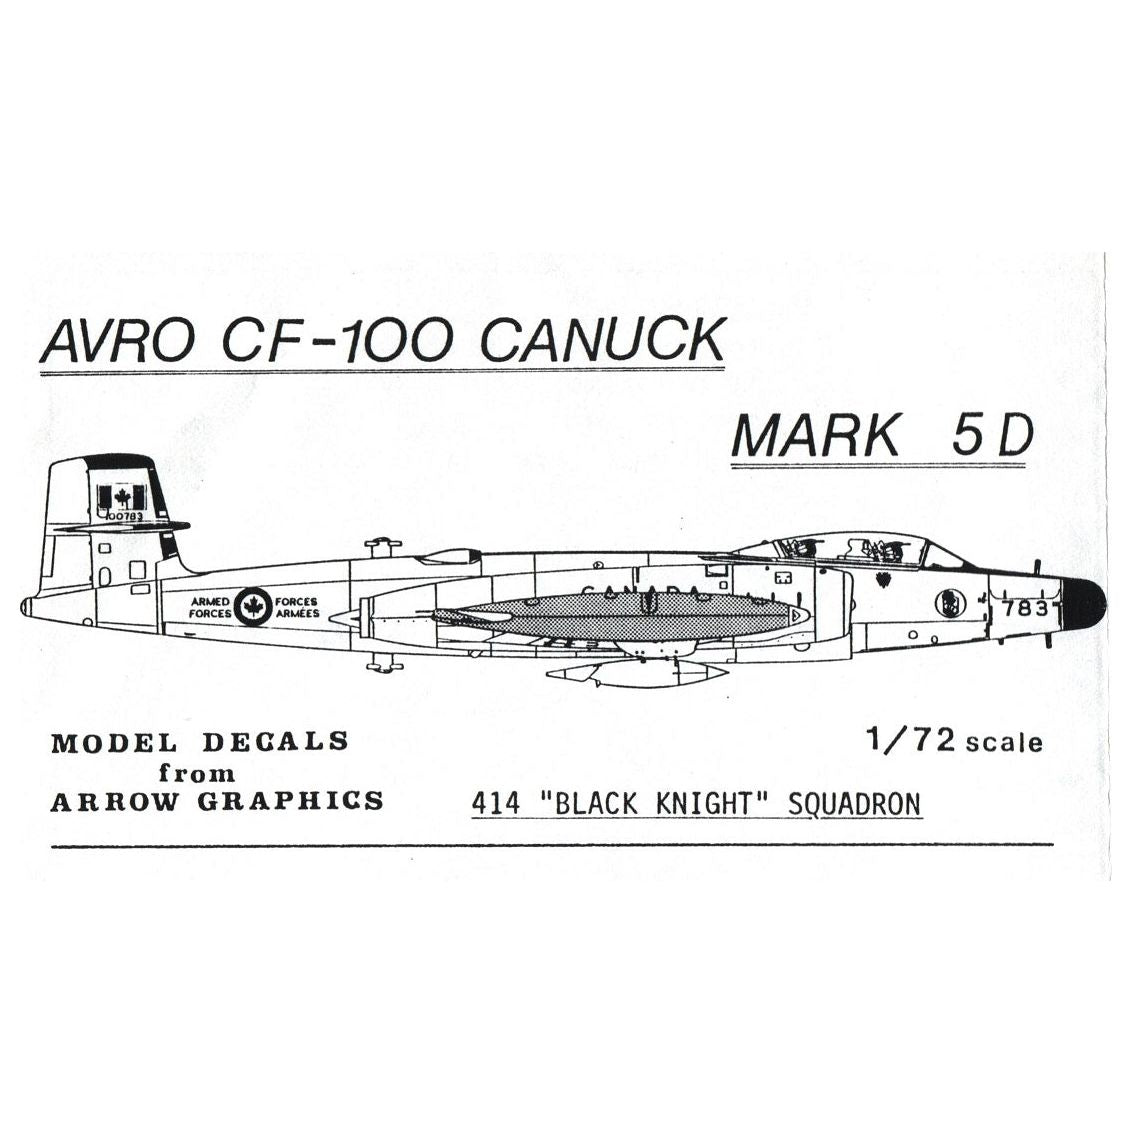 Model Decal [-] Avro CF-100 Canuck, 414 Black Knight Sqn., 1/72